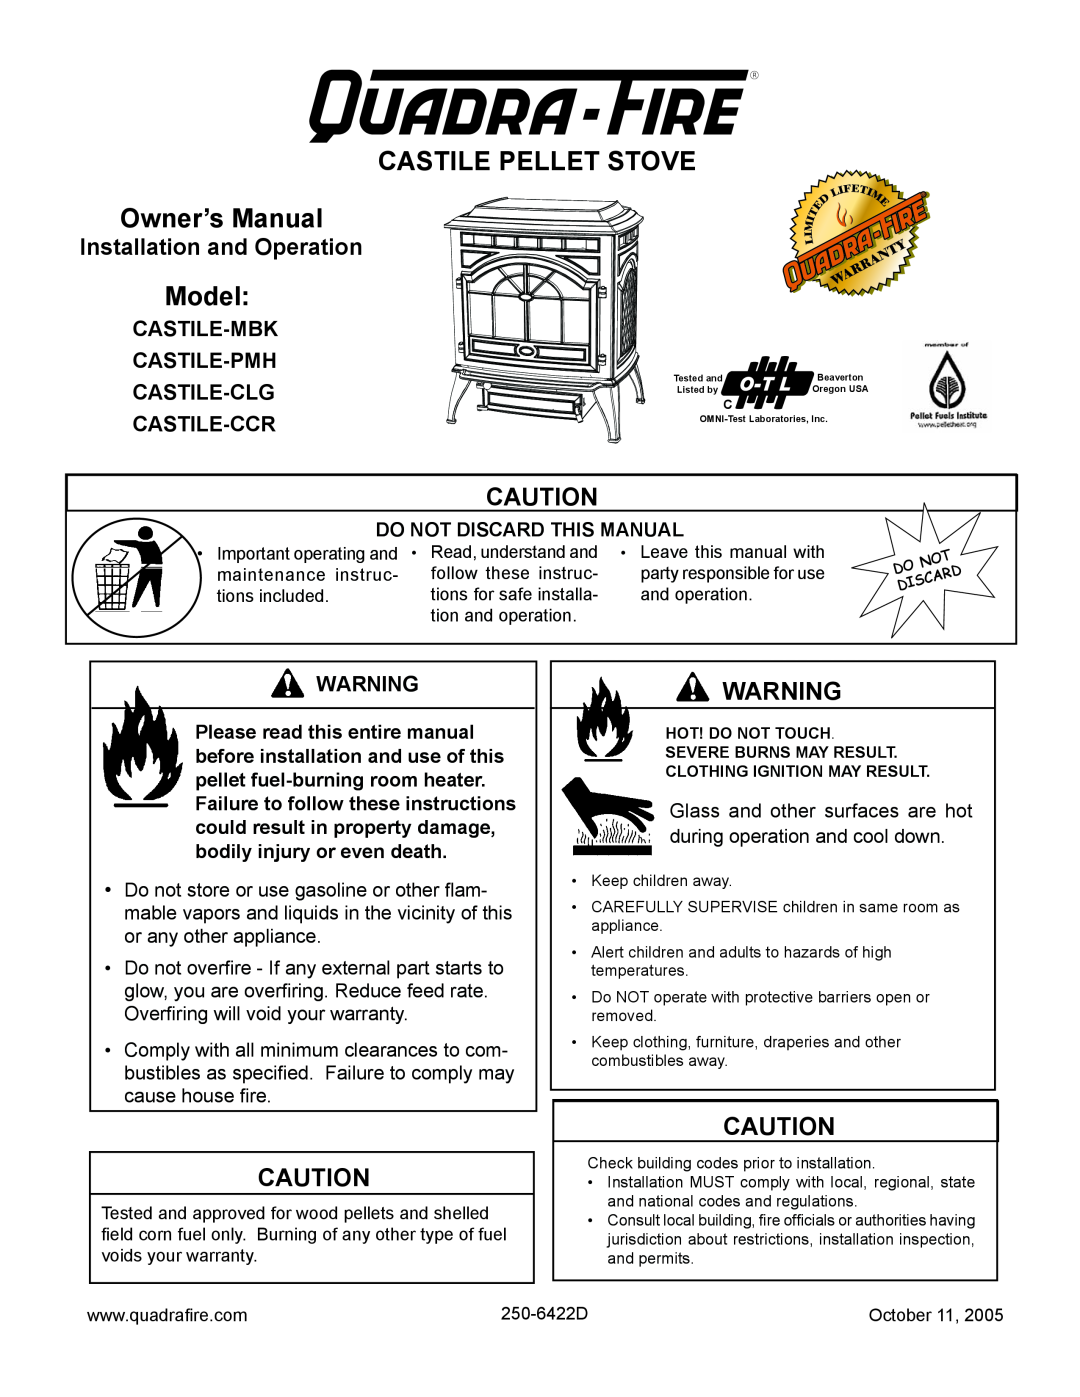 Quadra-Fire CASTILE-CLG, CASTILE-MBK, CASTILE-CCR owner manual Castile Pellet Stove, Model, Installation and Operation 